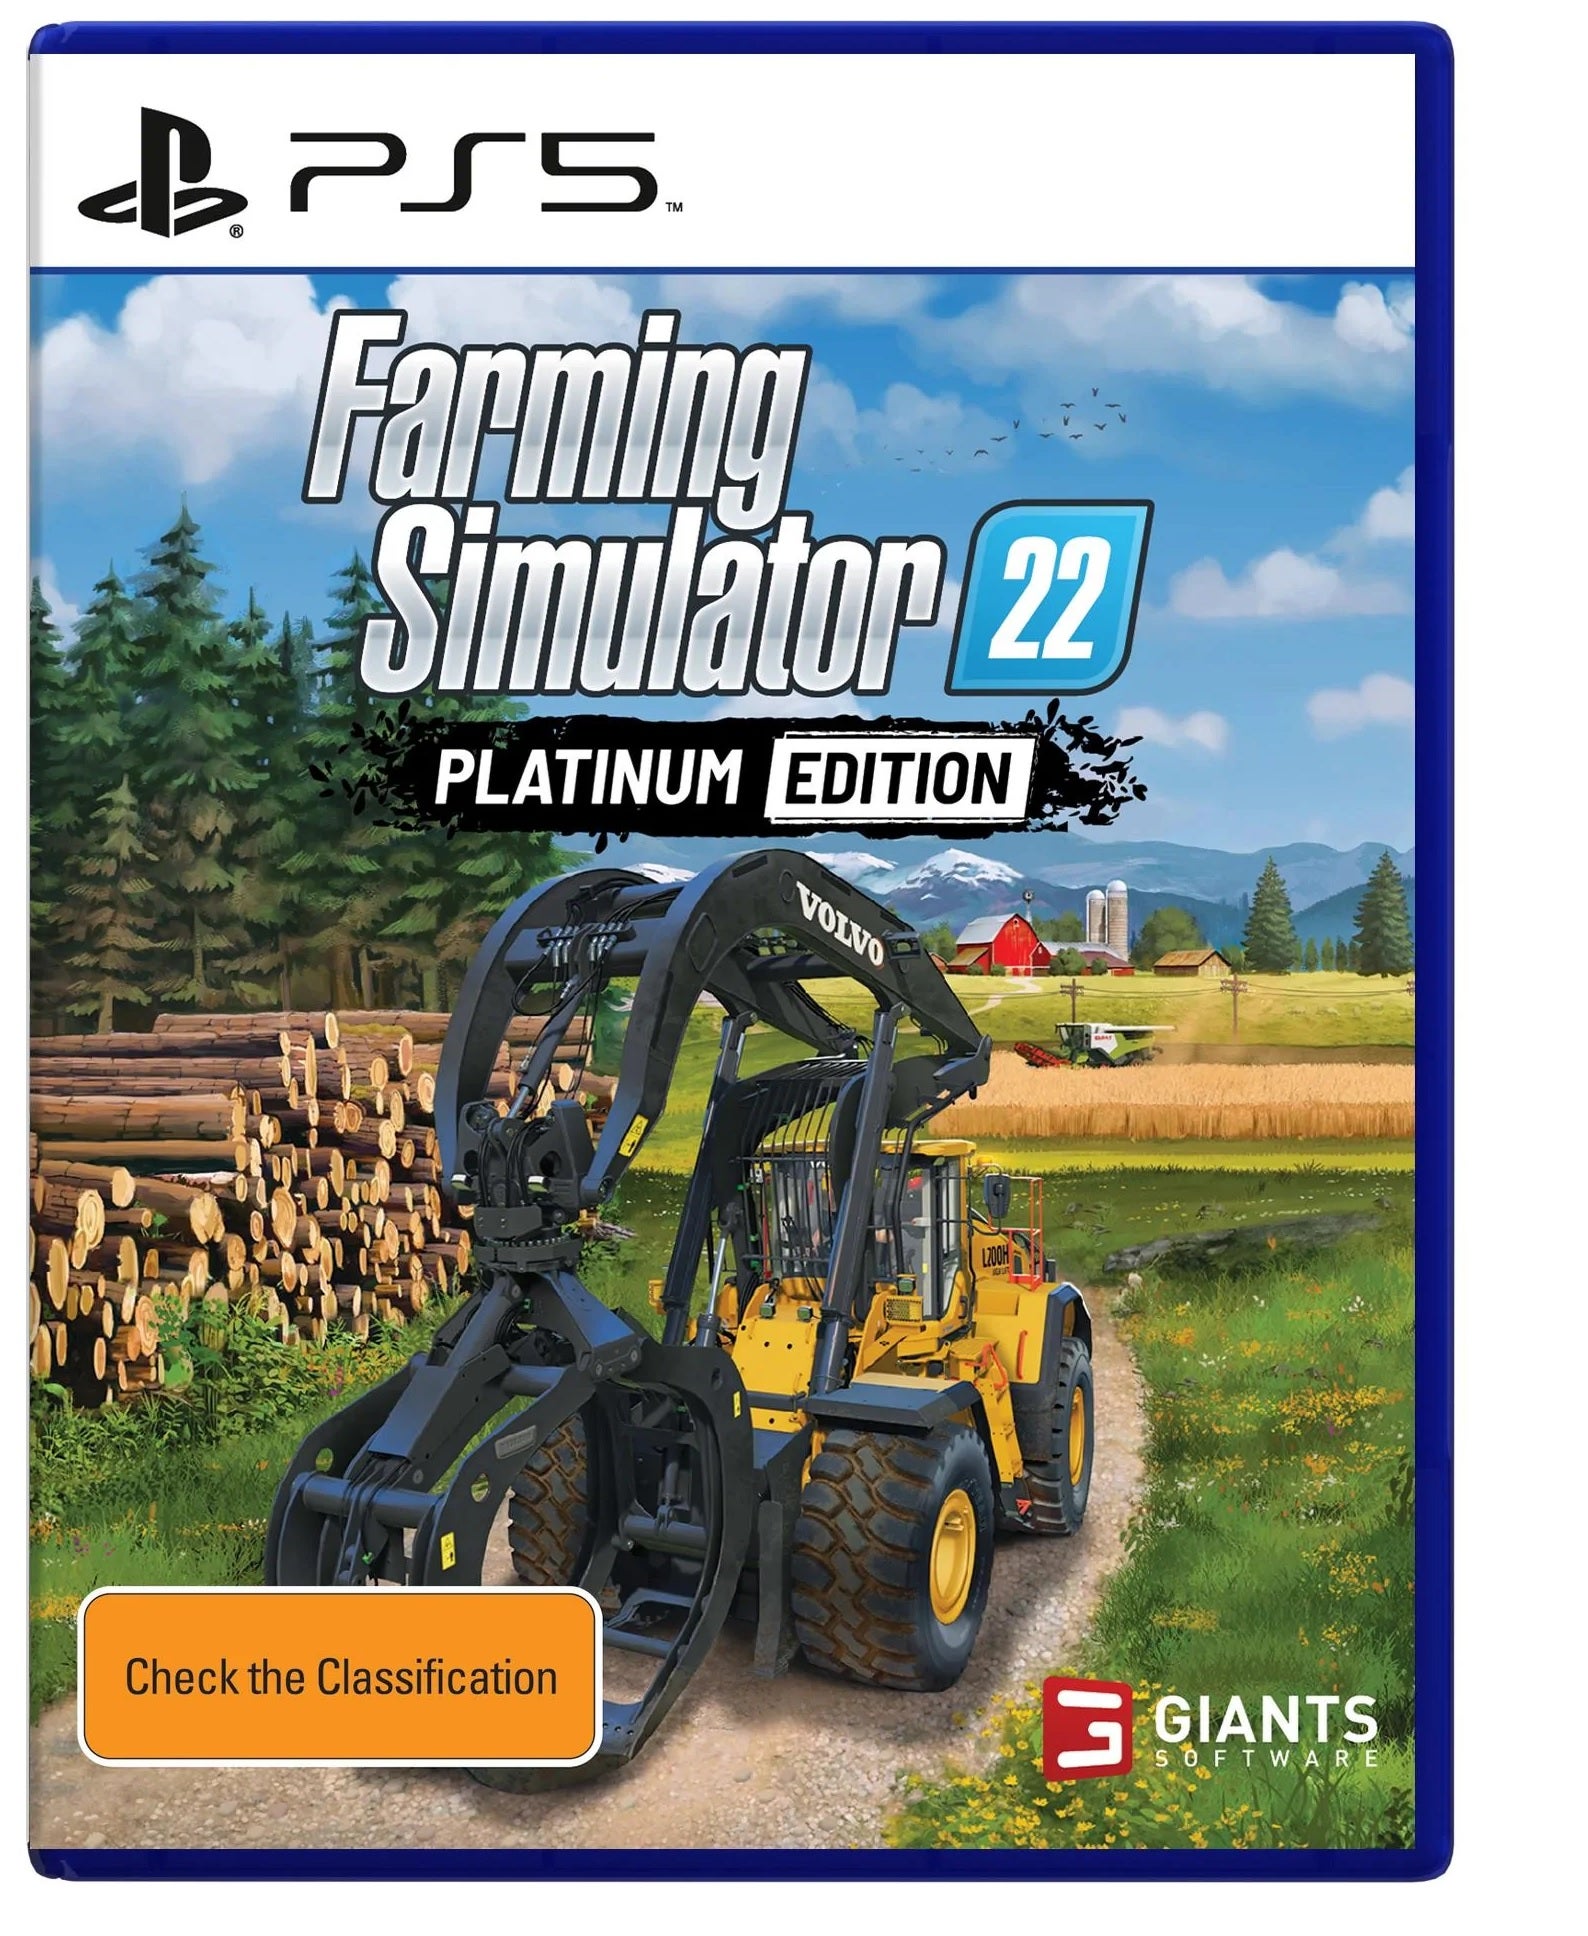 Giants Software Farming Simulator 22 Platinum Edition PS5 PlayStation 5 Game